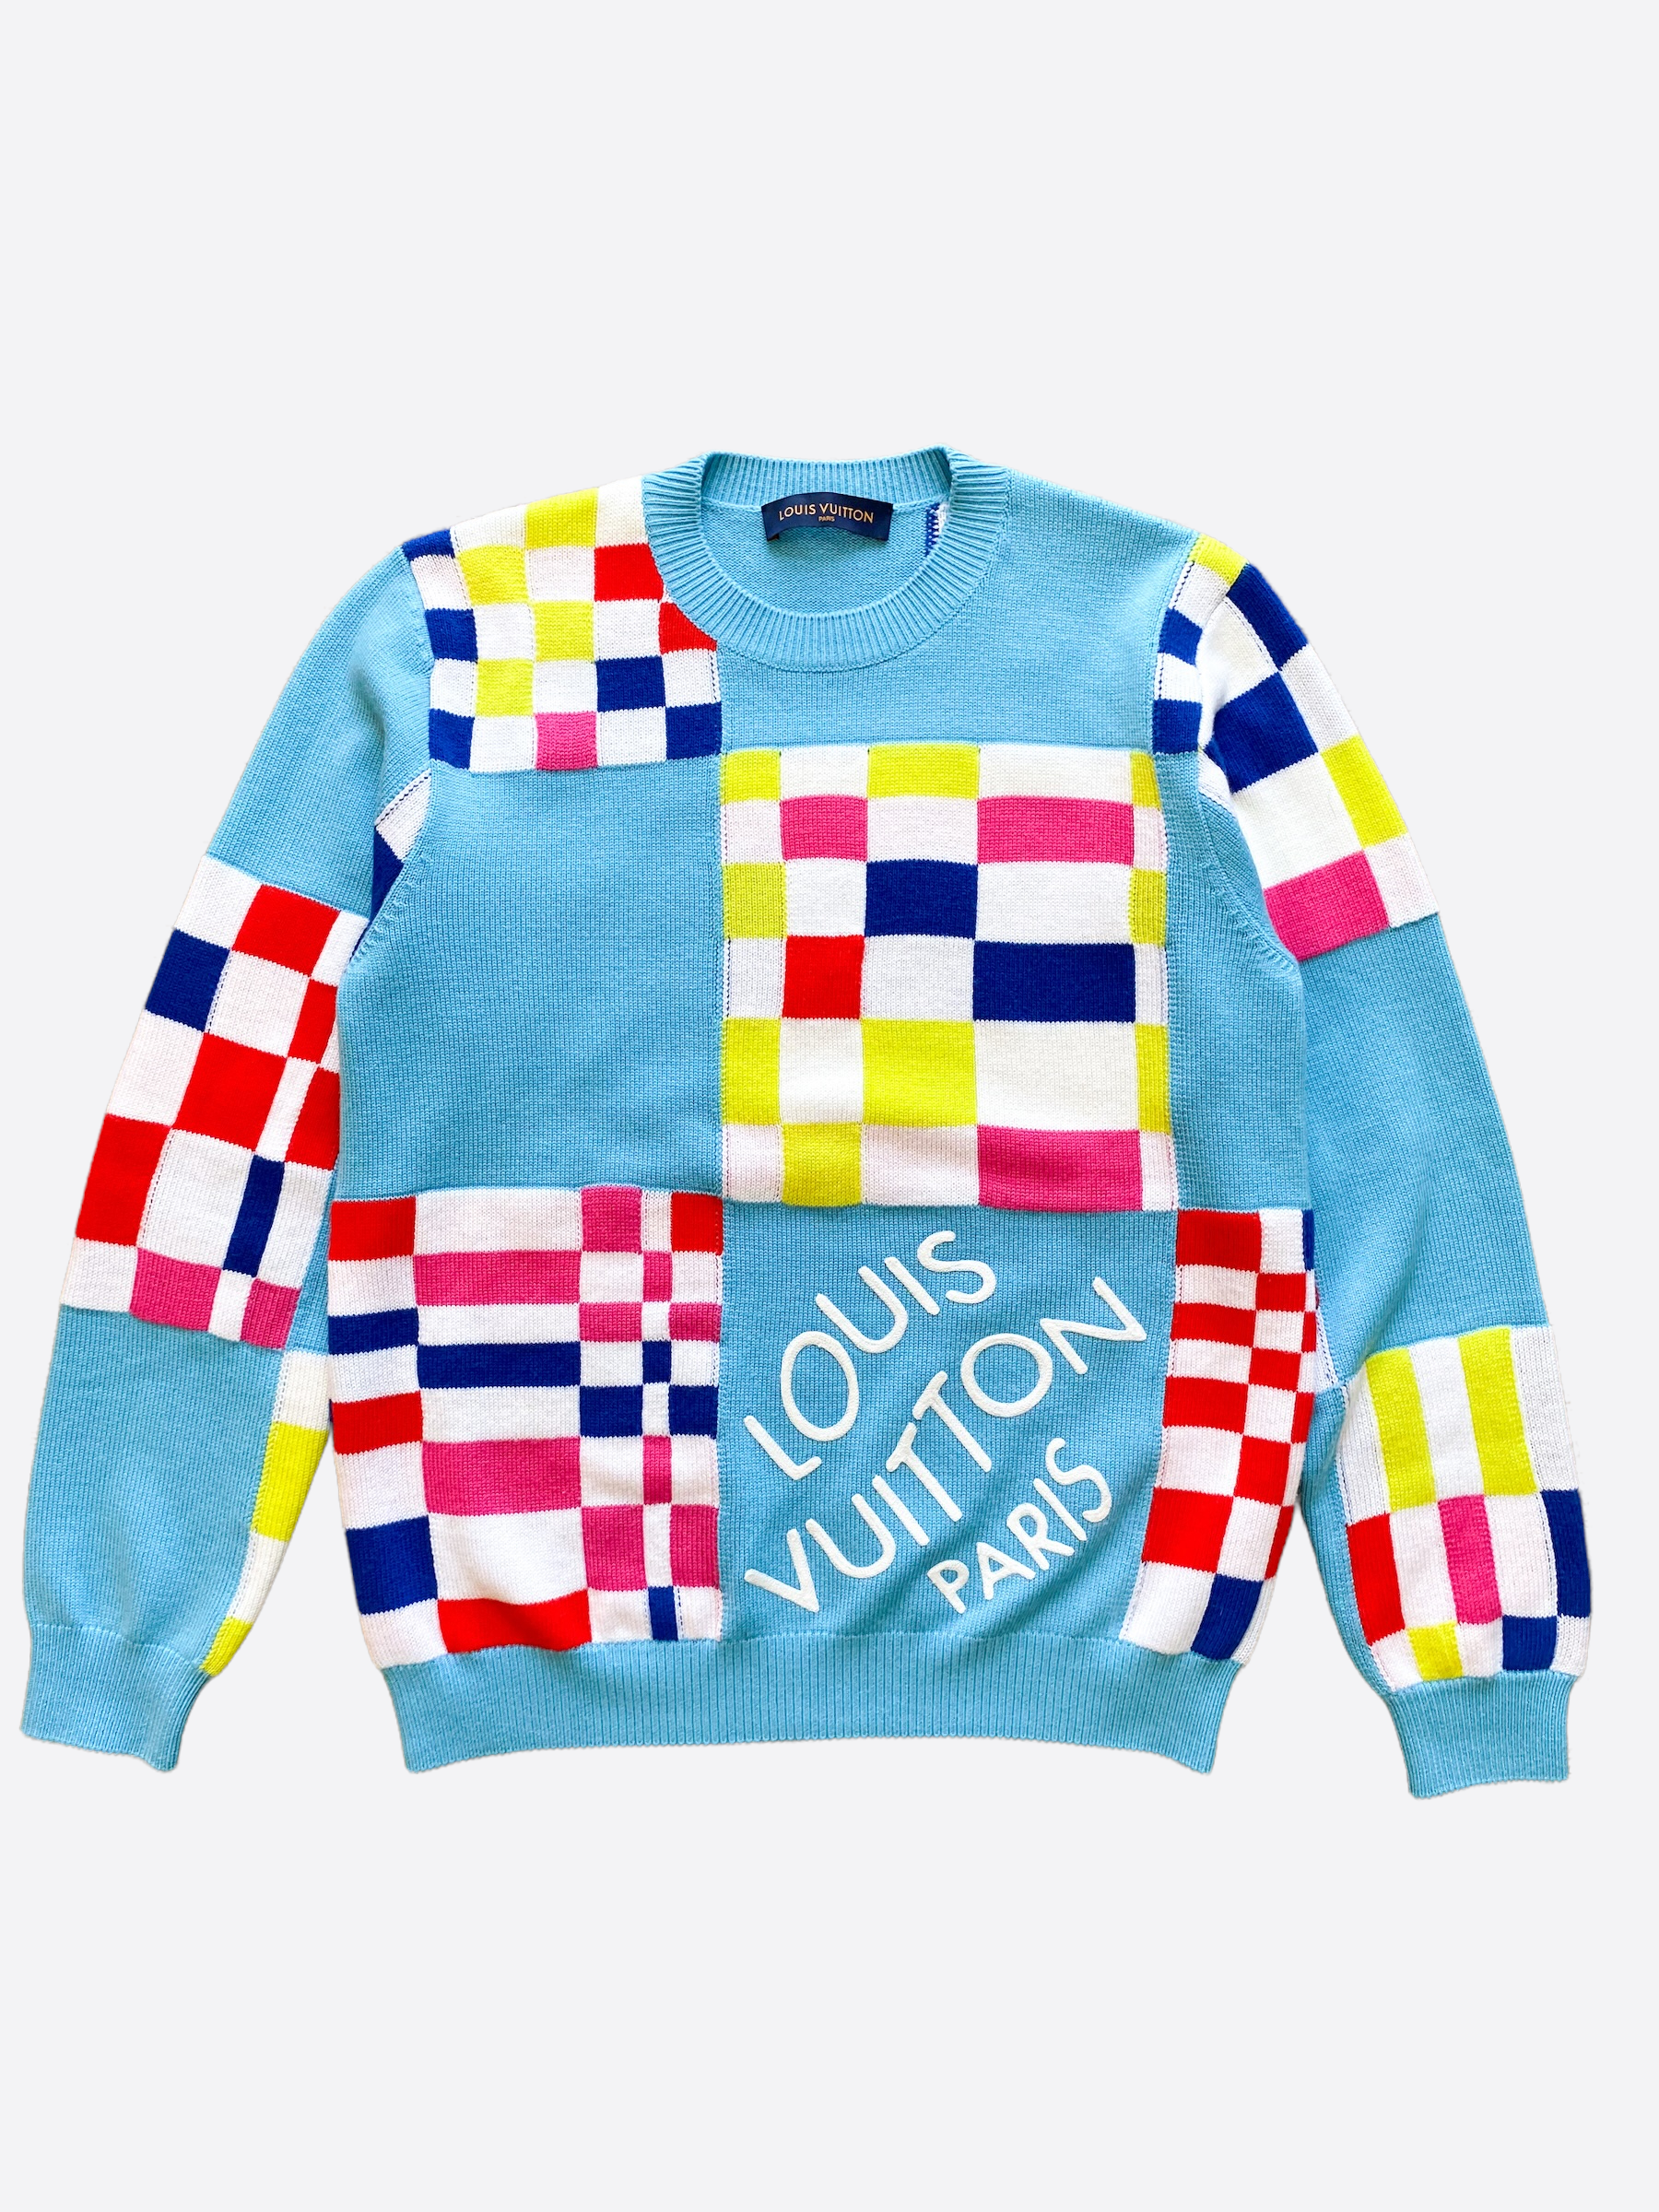 Louis Vuitton Men's Sweater